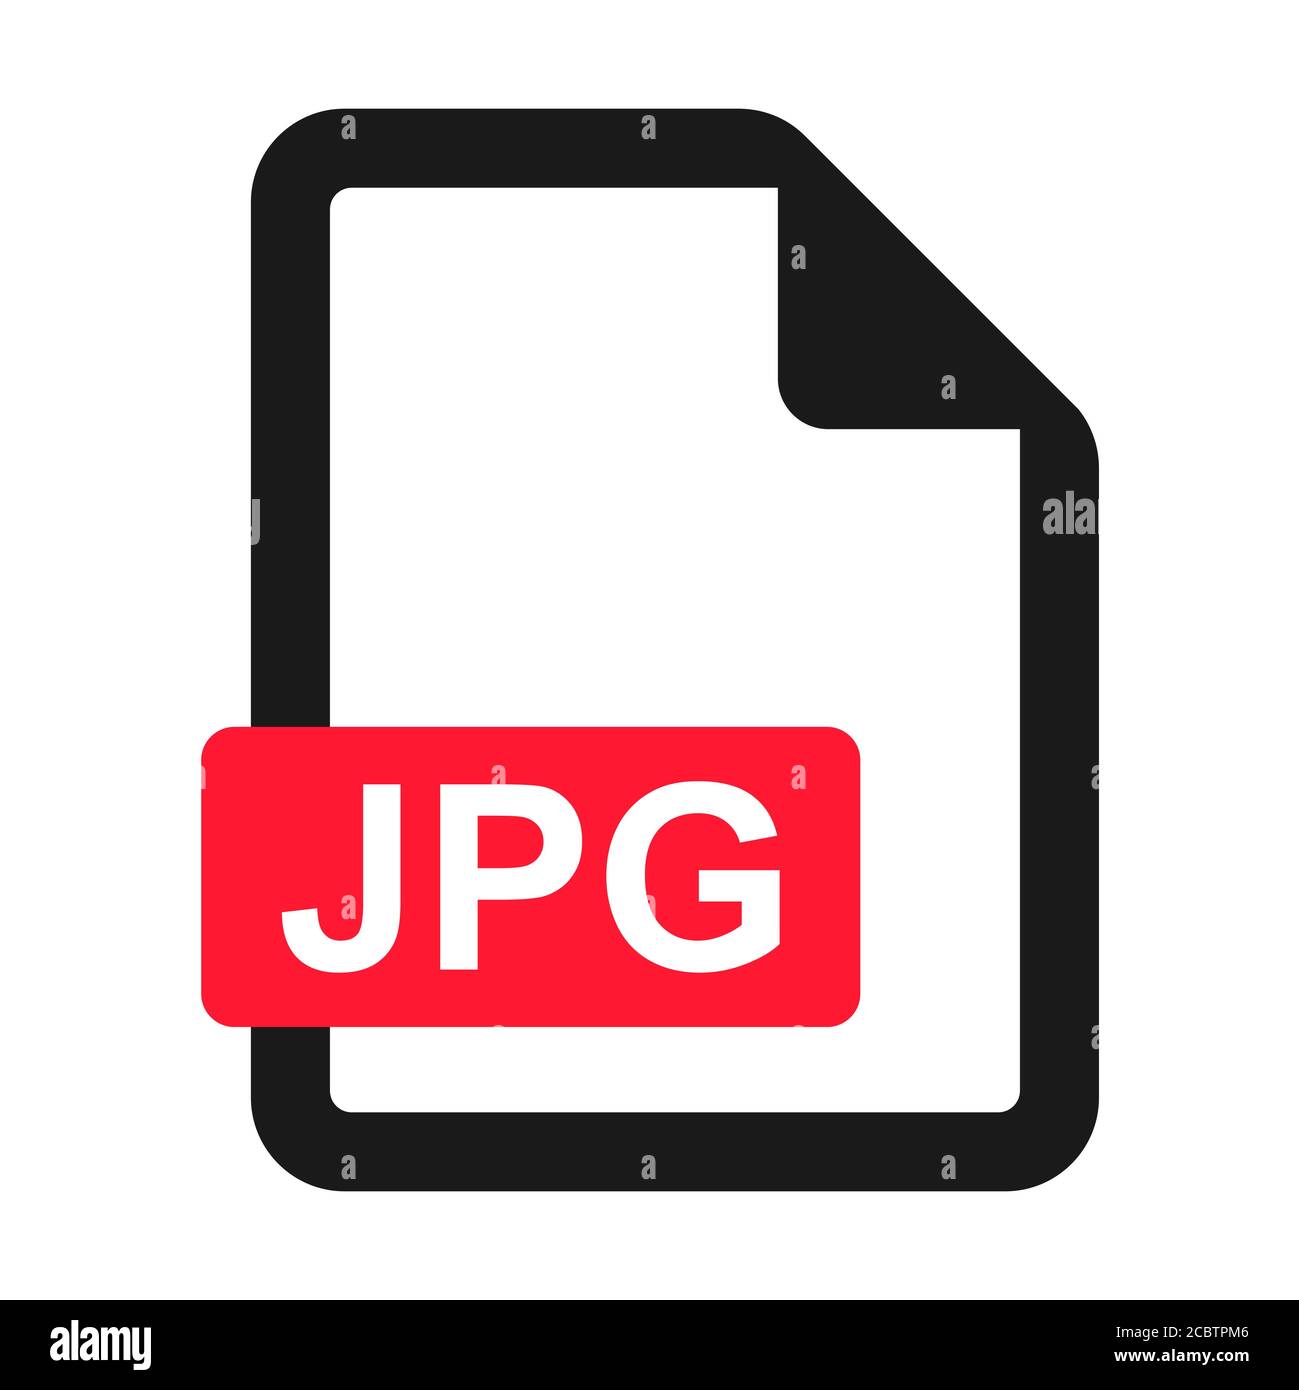 File JPG flat icon isolated on white background. JPG format vector illustration . Stock Vector